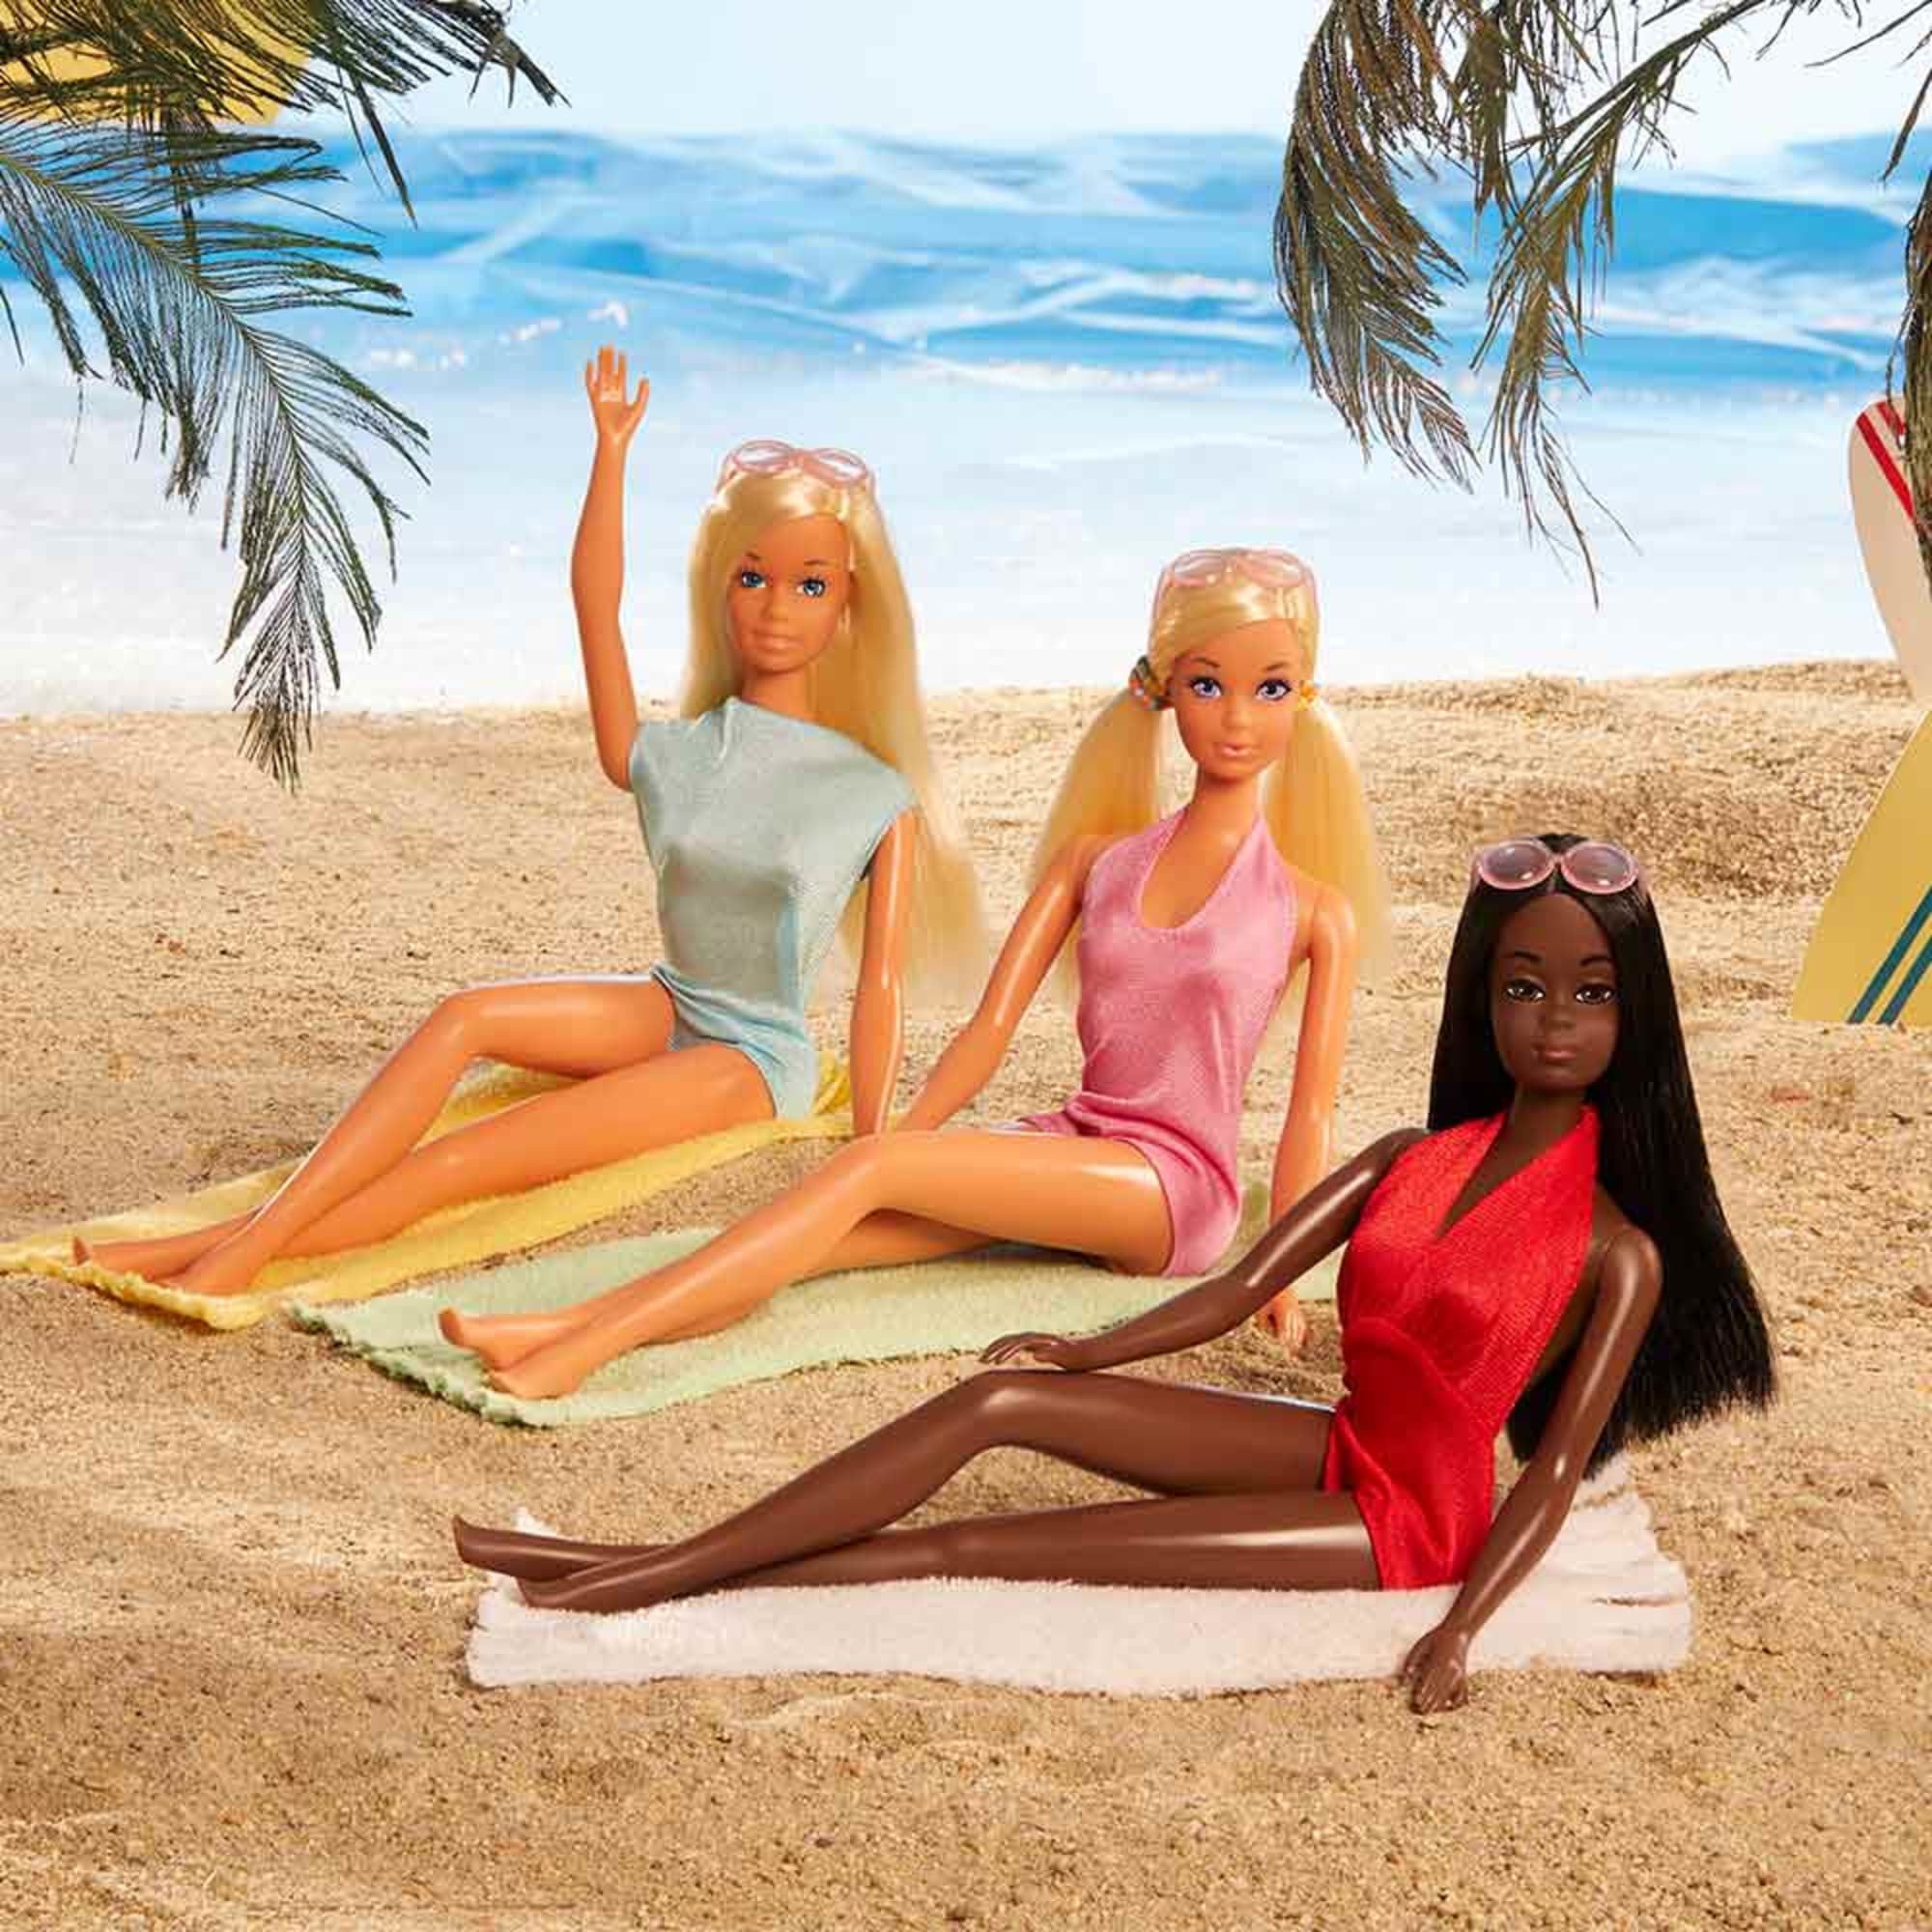 Malibu Barbie Surf Shop - With Sweep Option – Fancy Fabric & Props